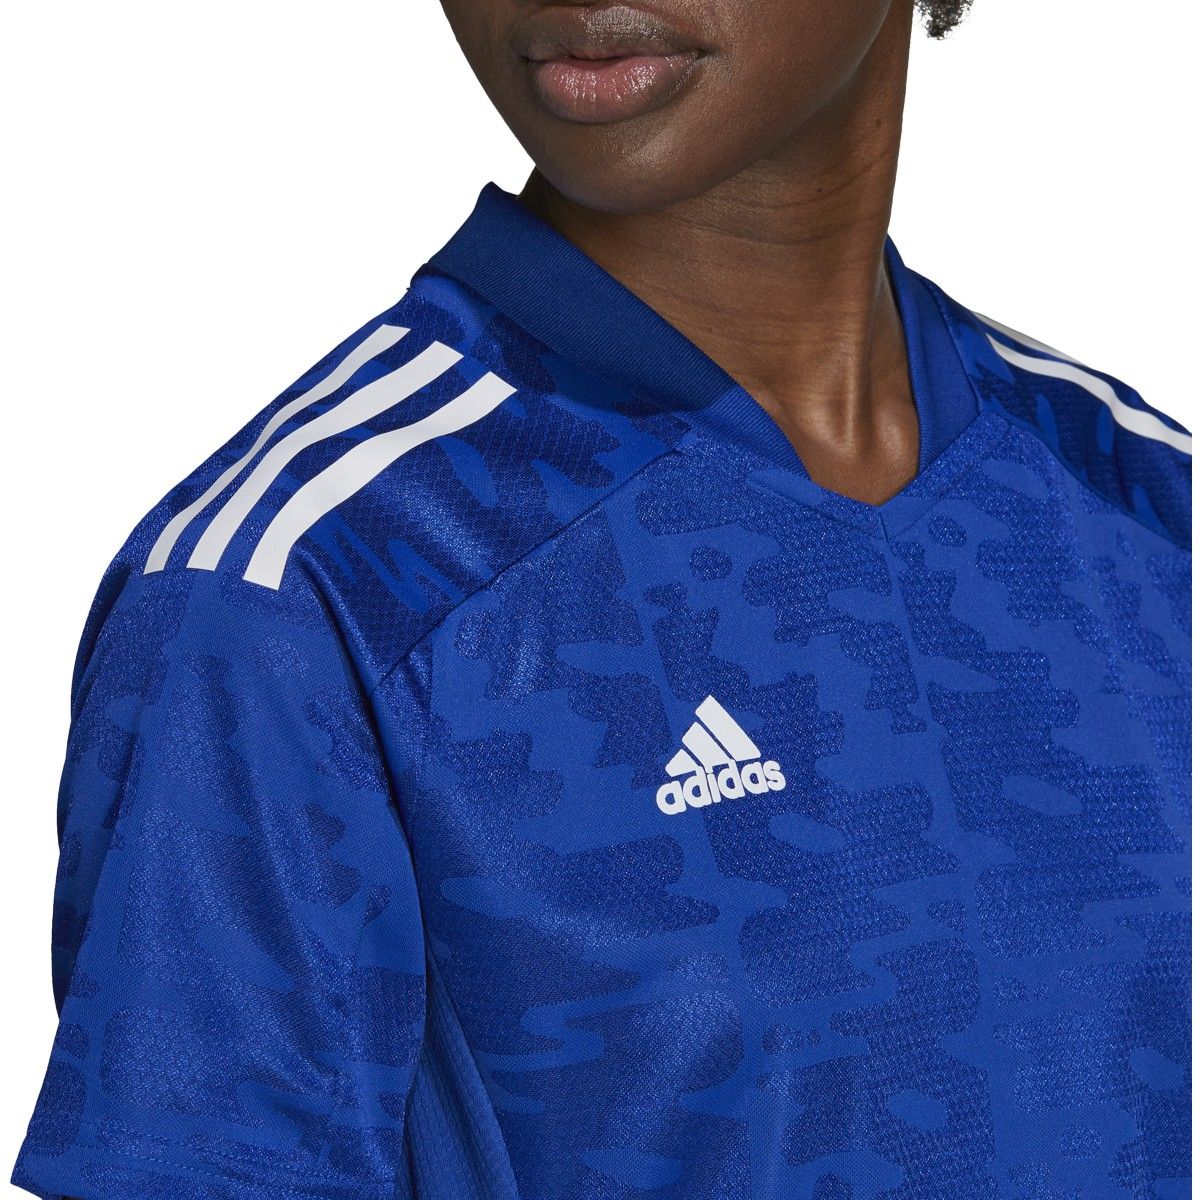 Adidas Women's Condivo 21 Primeblue Blue/White Soccer Jersey XL